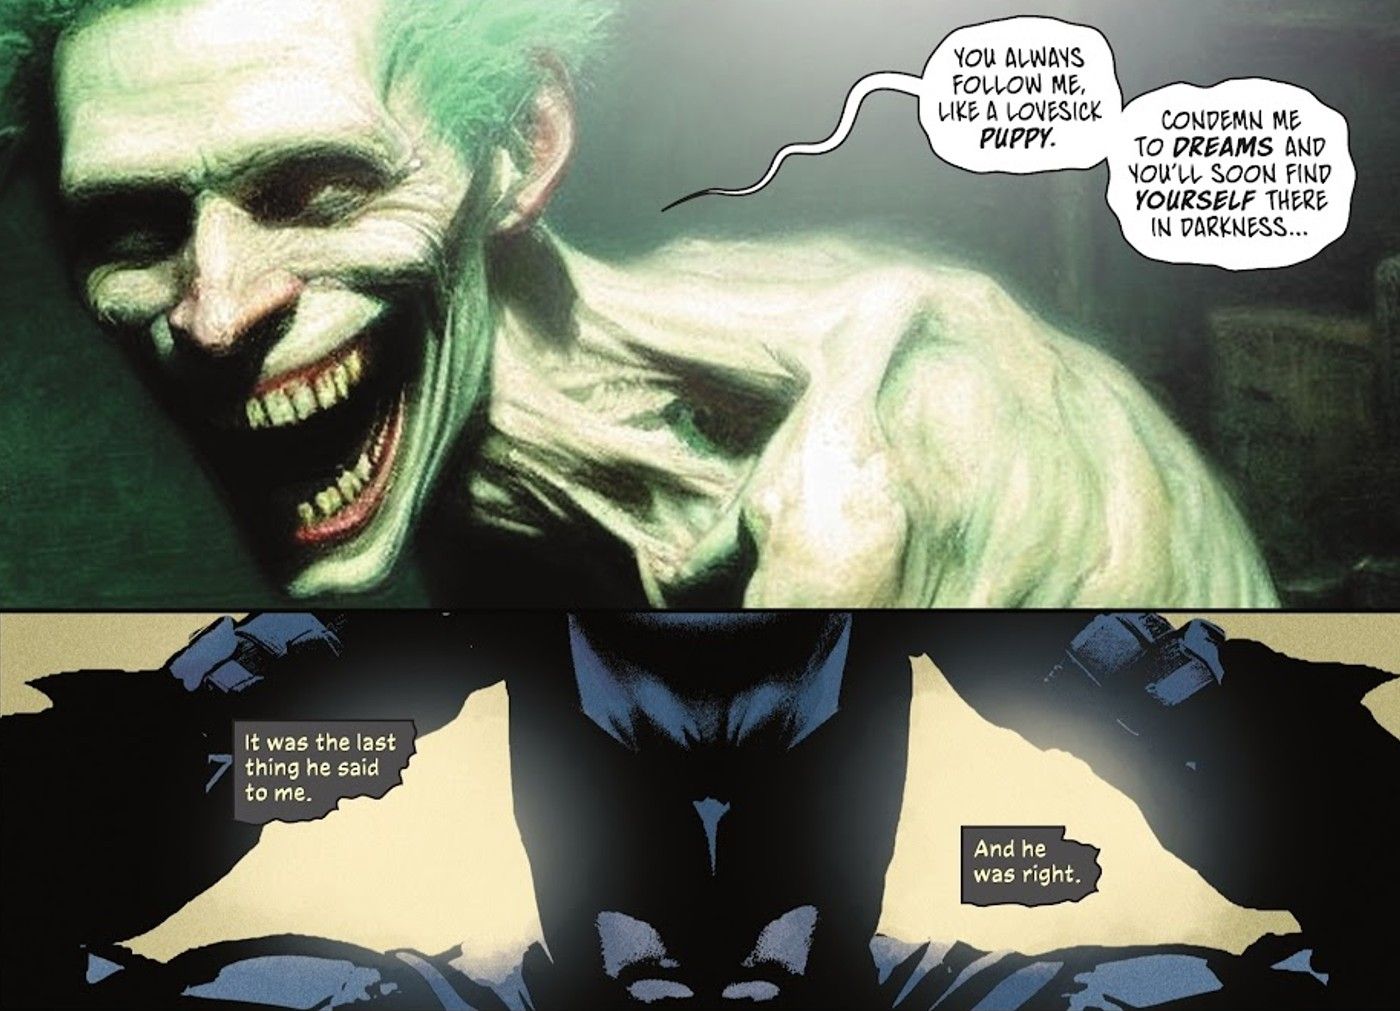 Comic book panels: the Joker grinning and Batman adjusting his mask.